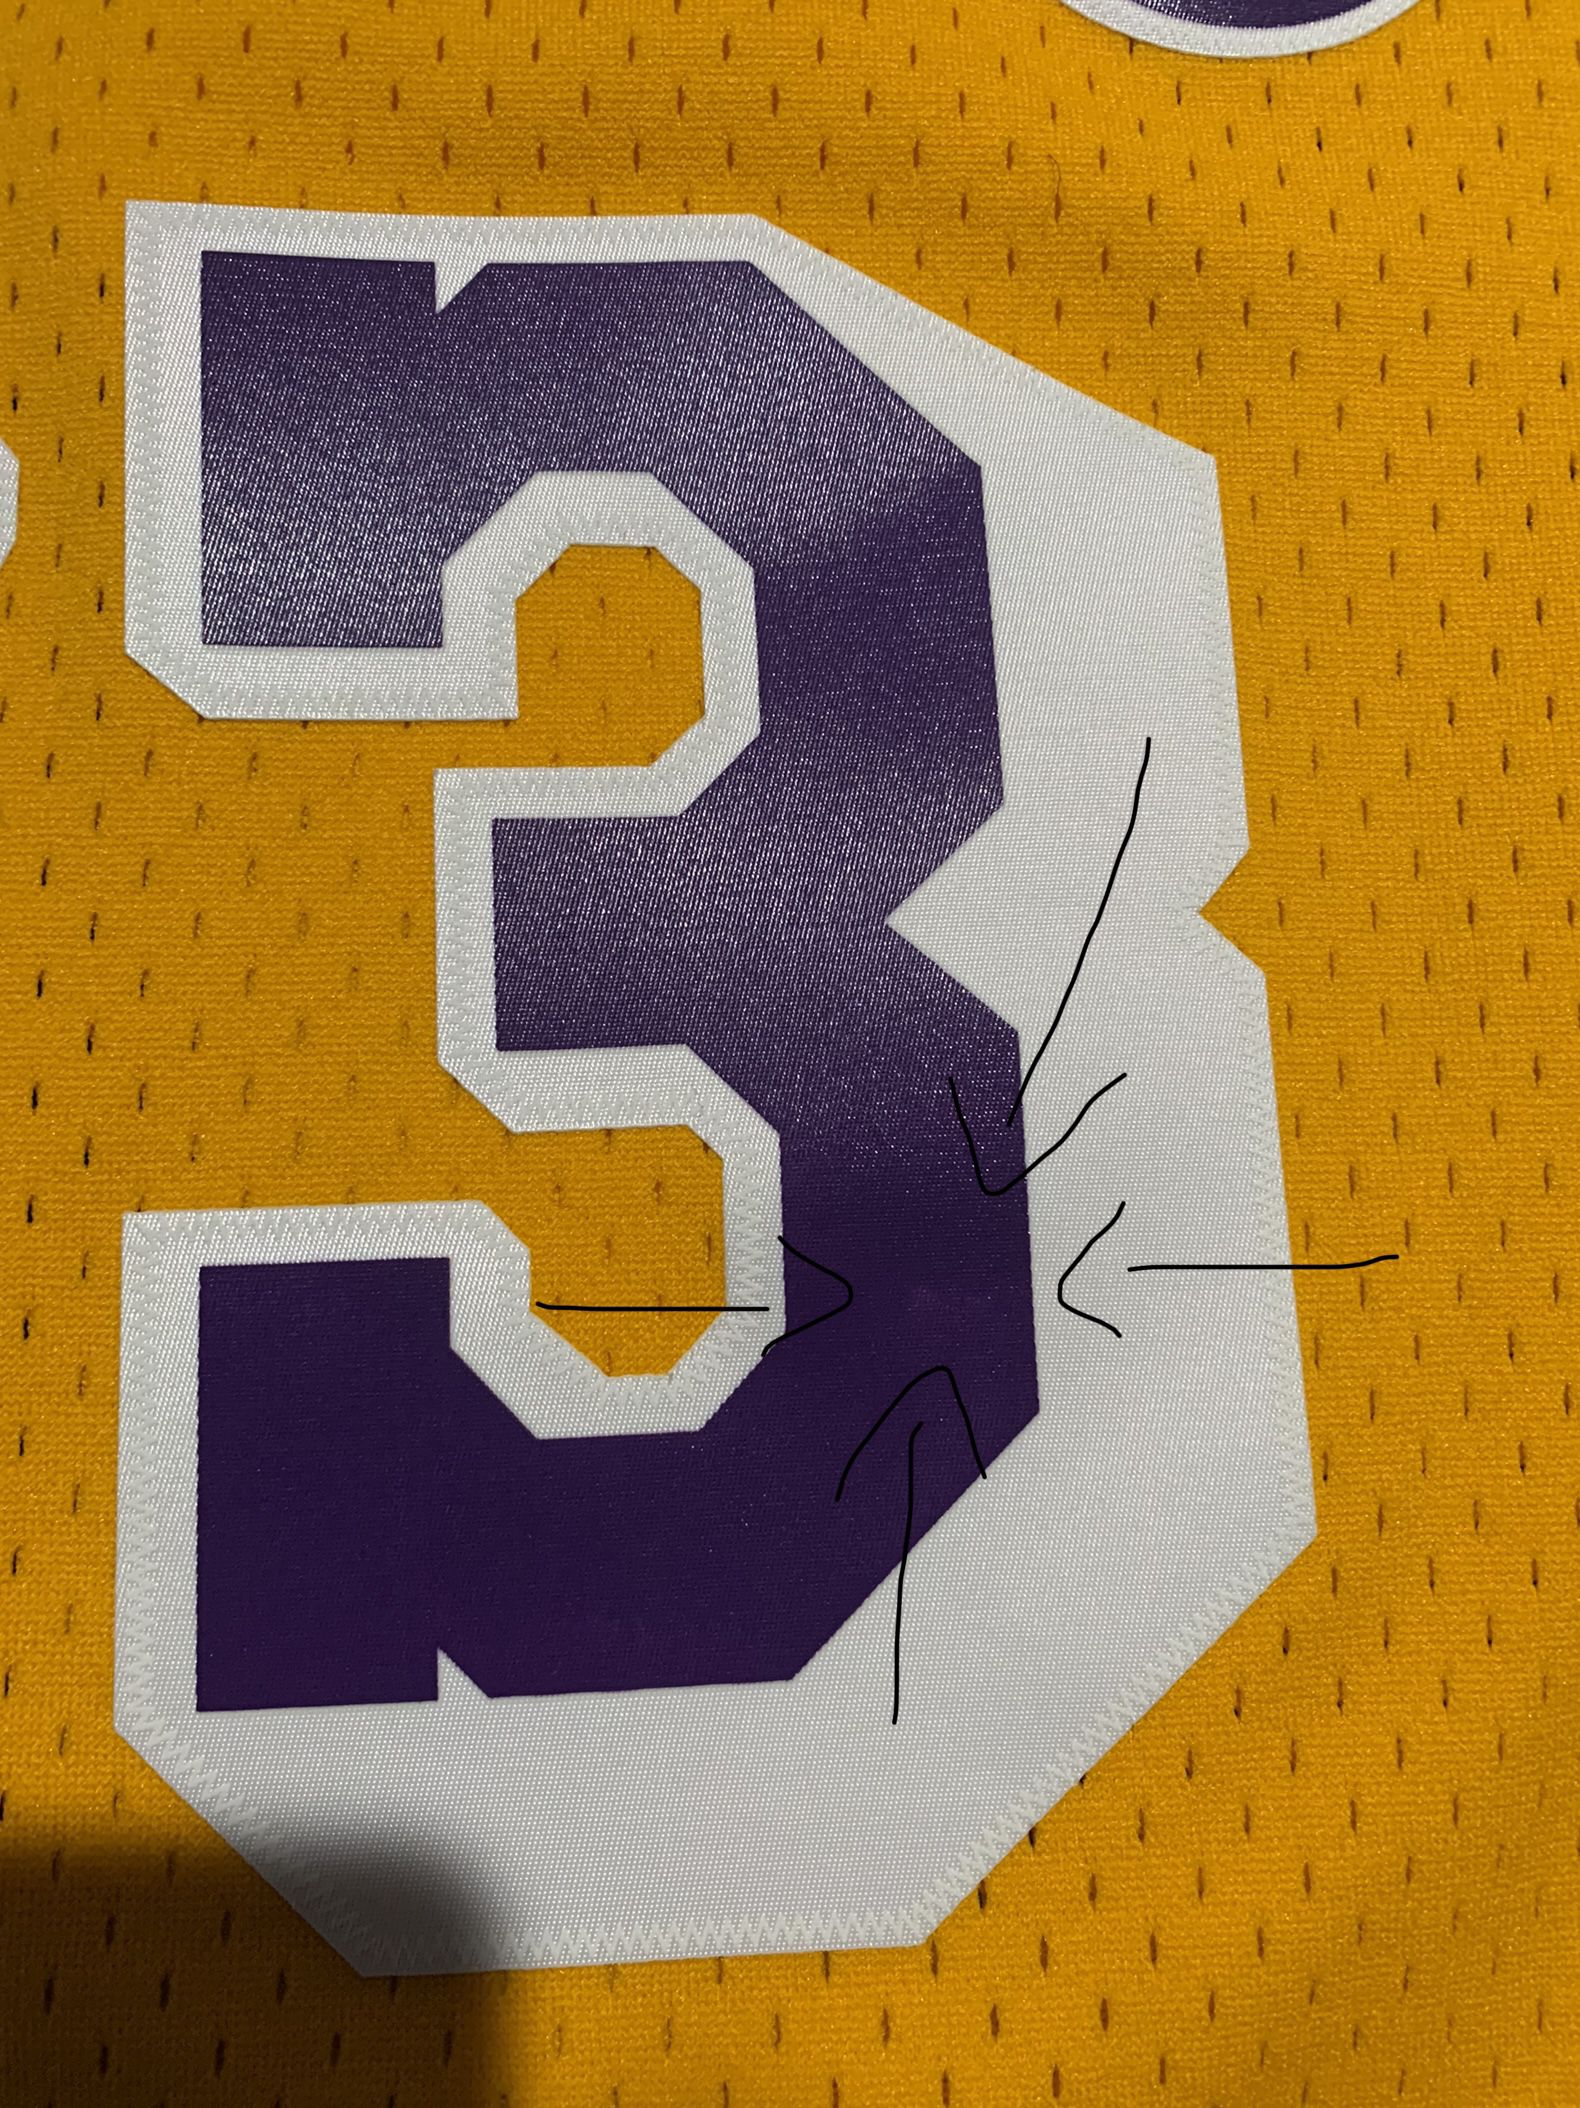 Retro Lakers Dennis Rodman 73 Jersey – Ice Jerseys